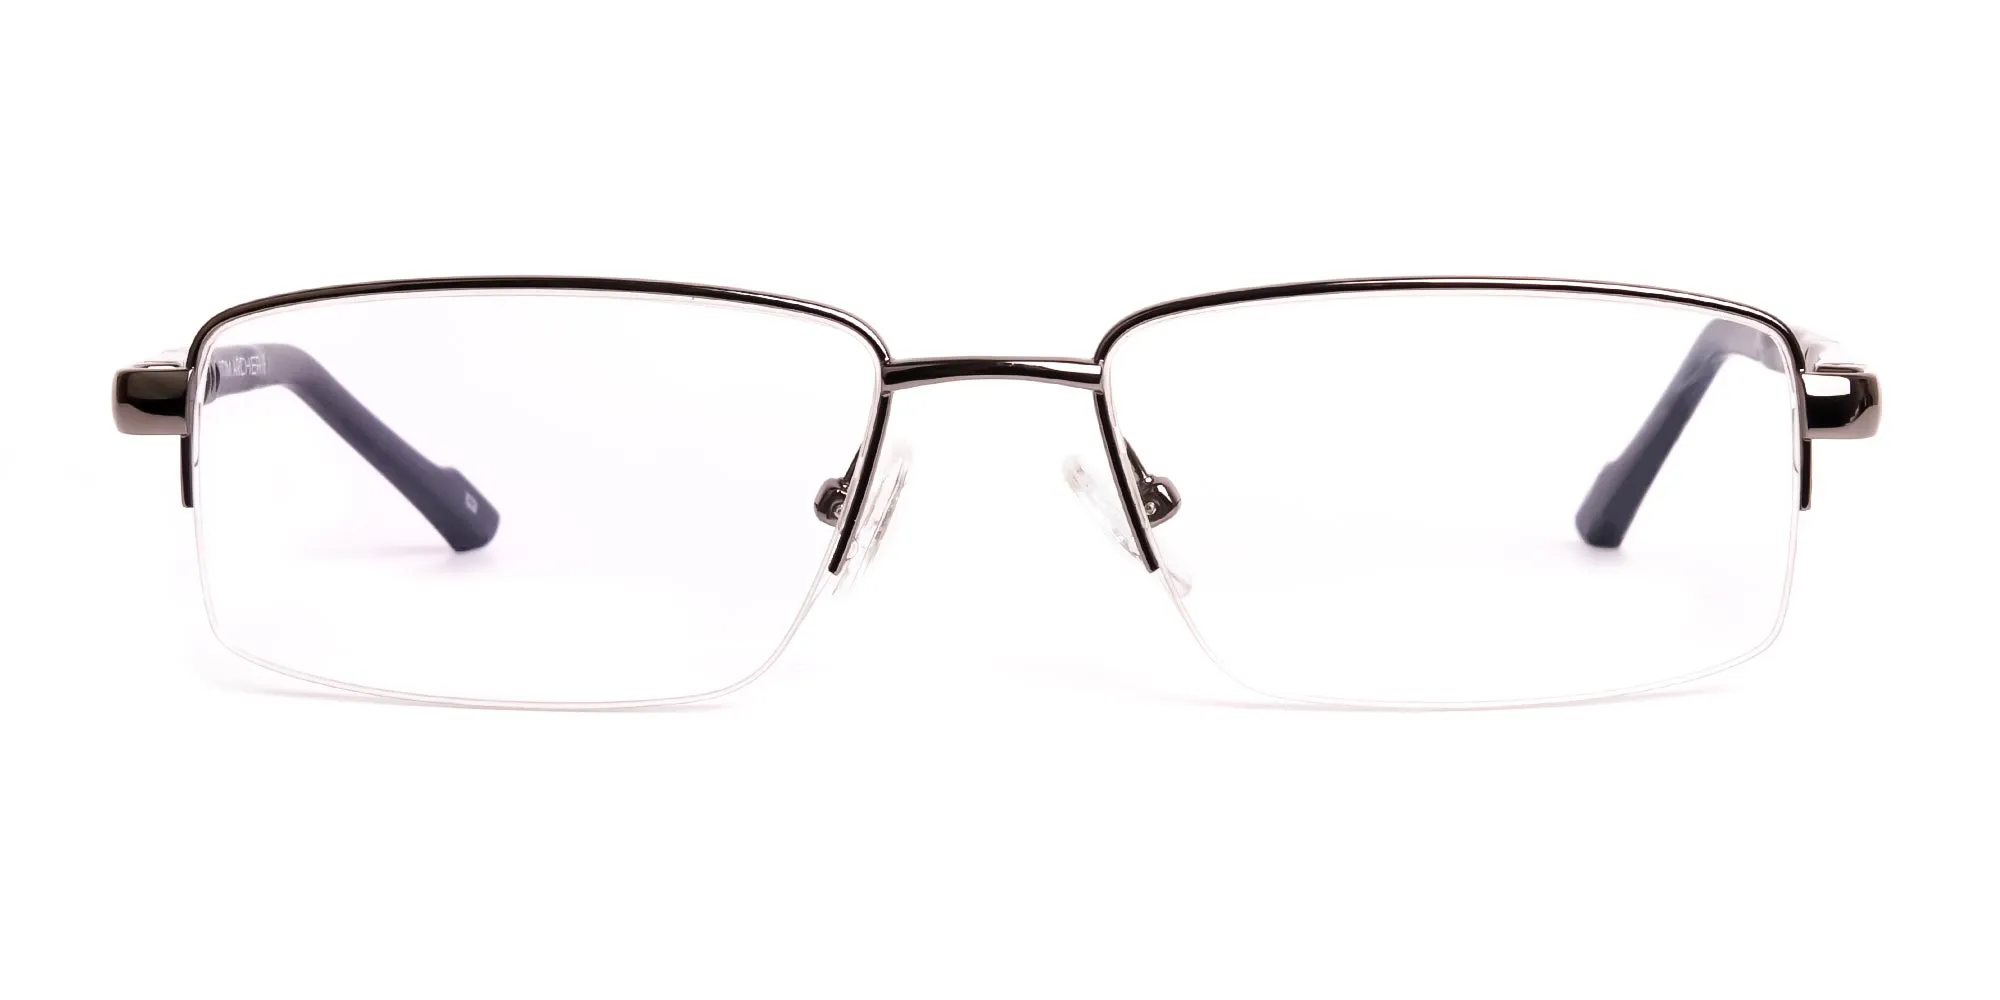 gunmetal and black half rim rectangular glasses frames -2